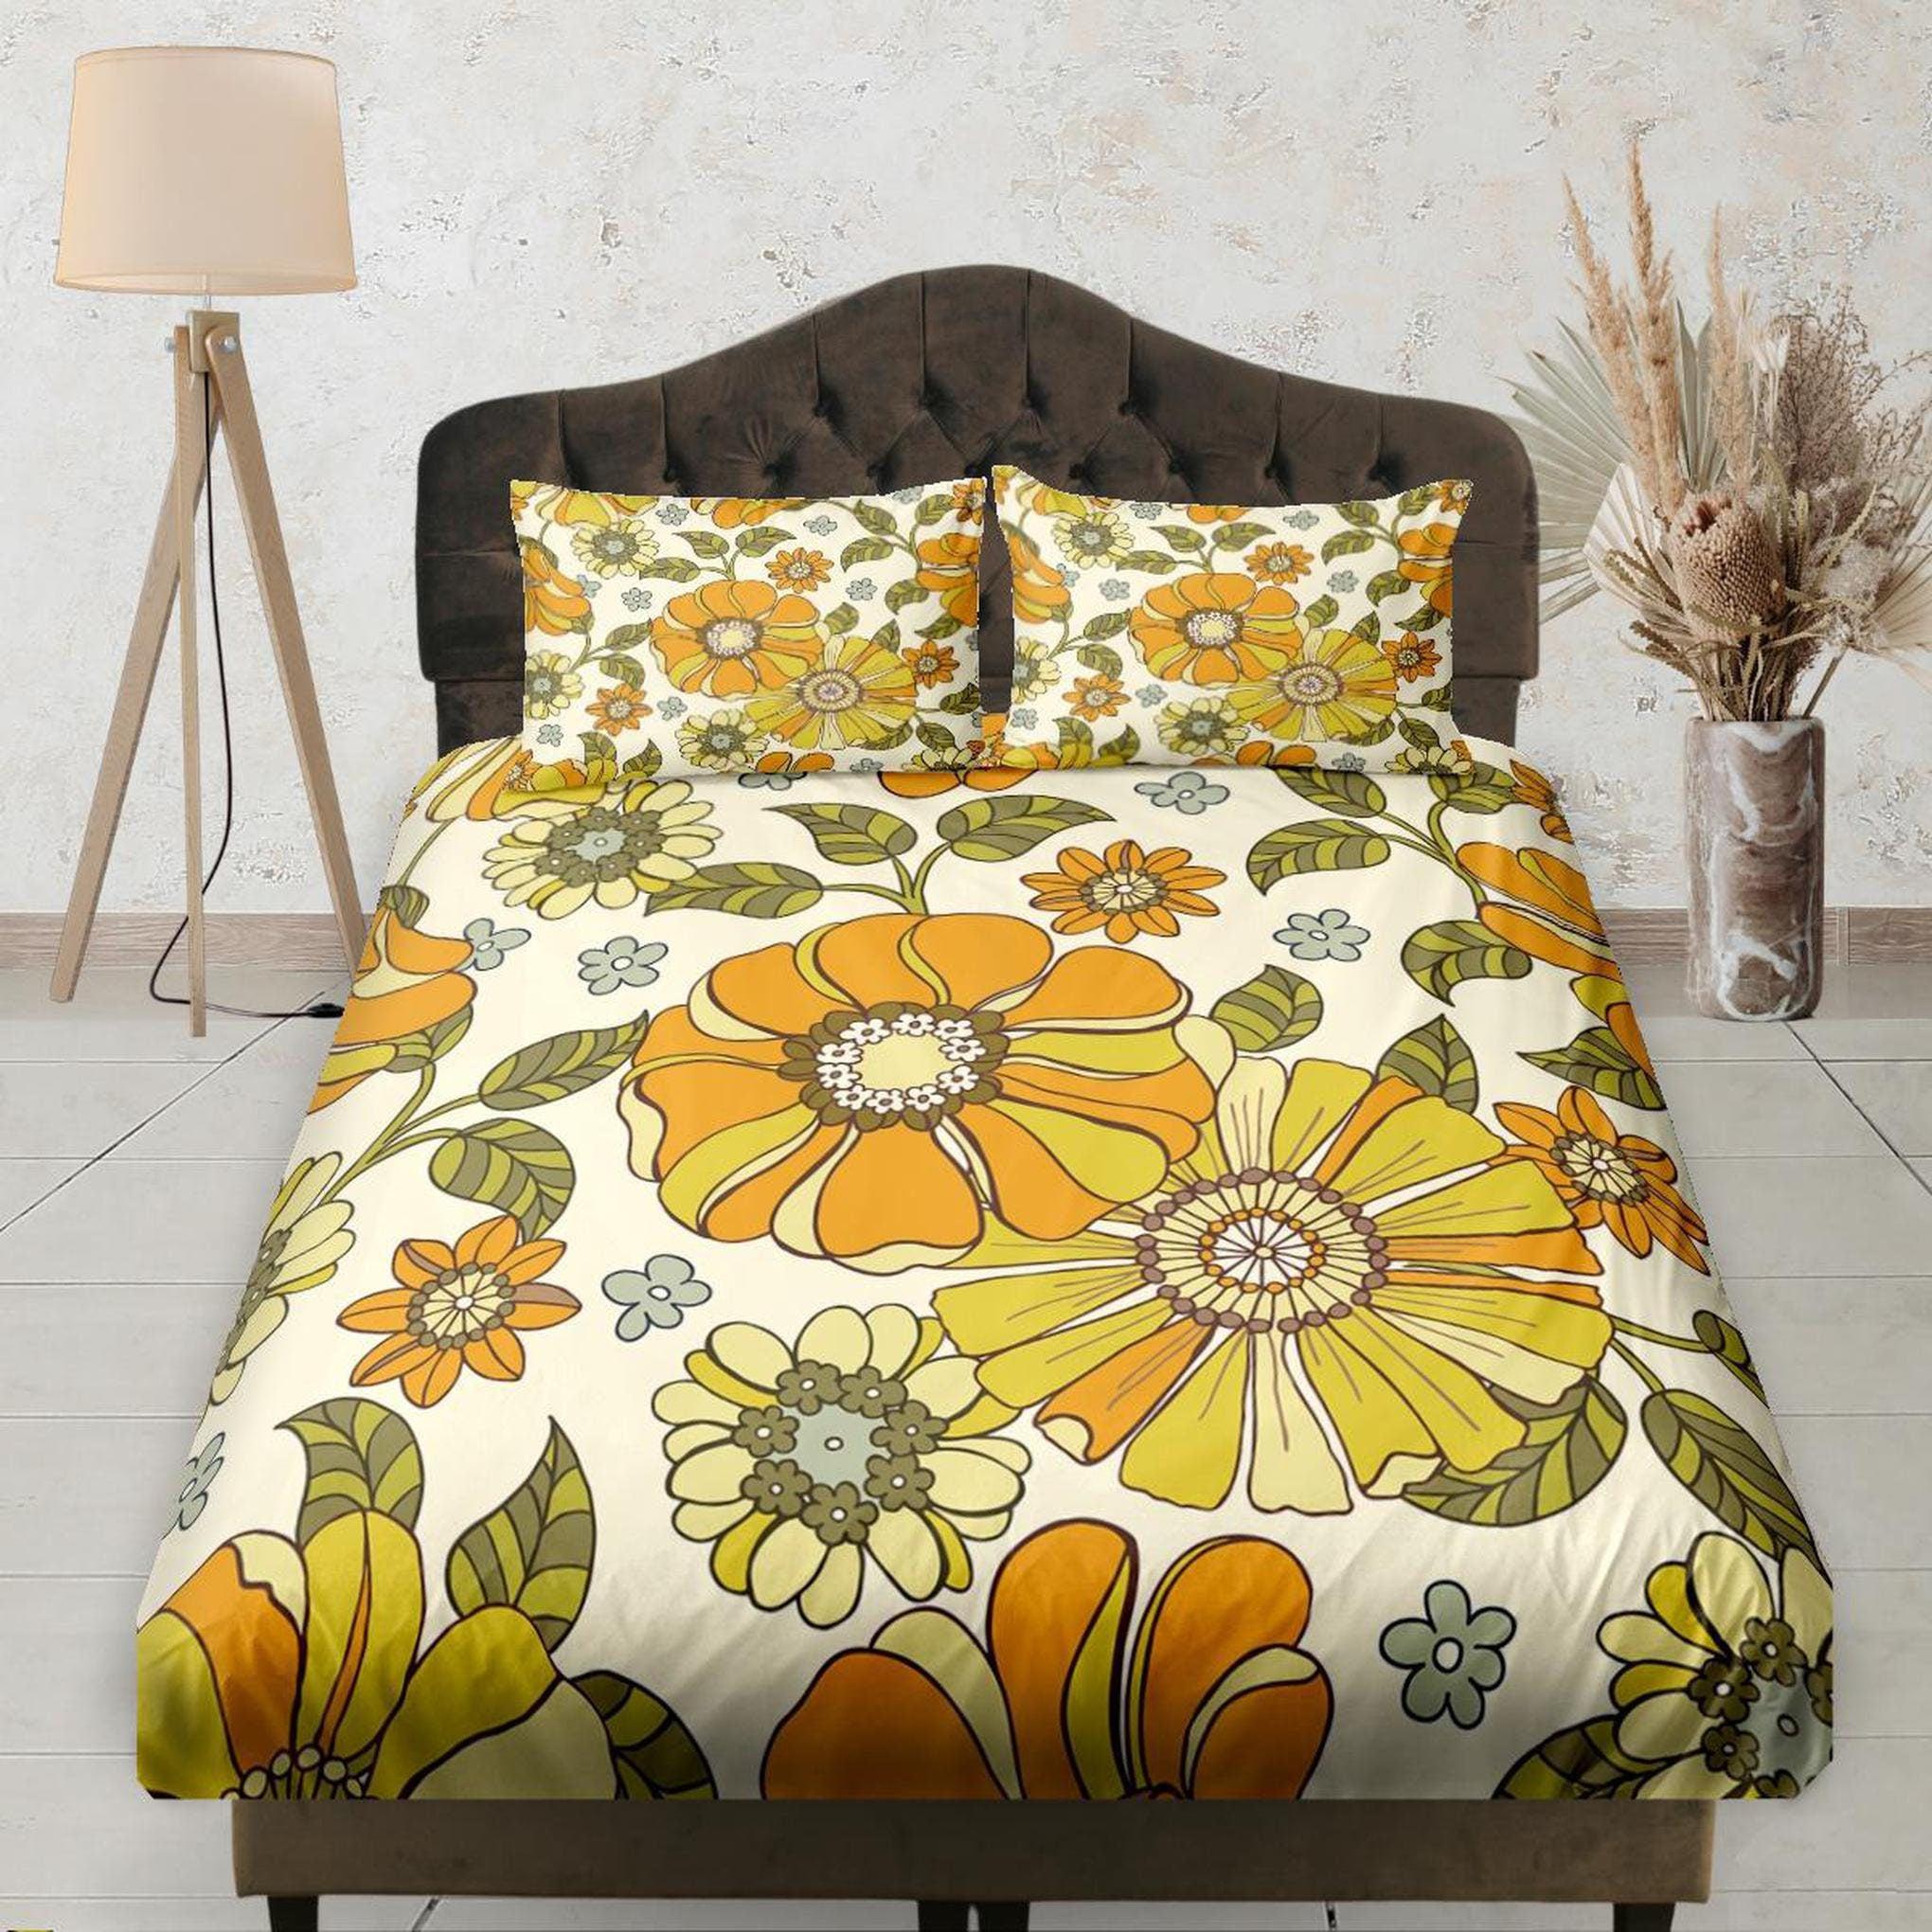 daintyduvet Orange Floral Printed Mid Century Modern Bedding, Fitted Sheet Deep Pocket, Aesthetic Boho Bedding Set Full, Elastic Bedsheet, Dorm Bedding